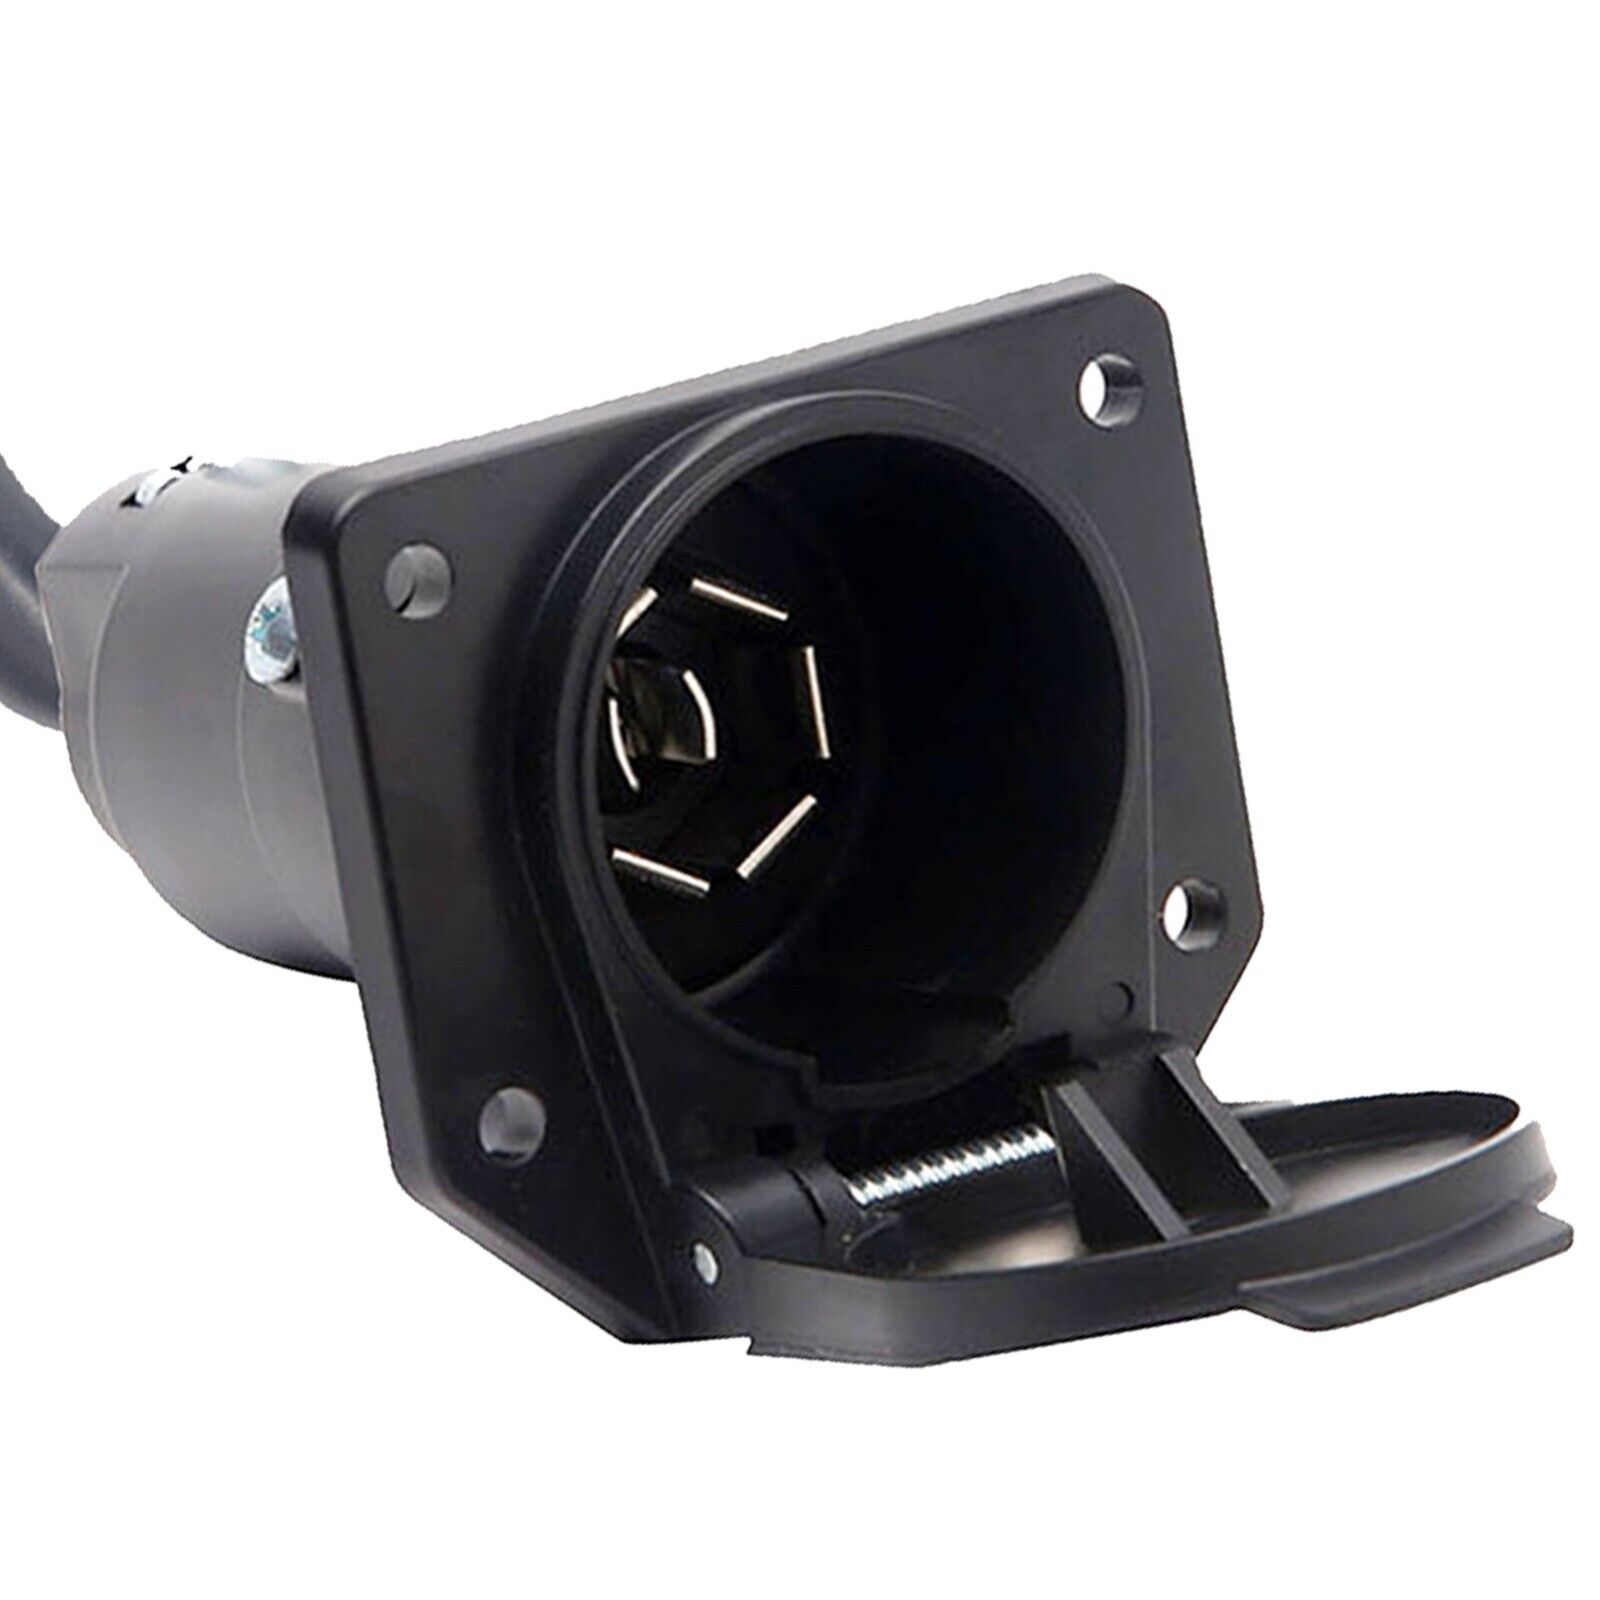 CARROFIX European 7-Pin Round Connector to US 7-Way RV Blade Adapter Trailer Light Converter